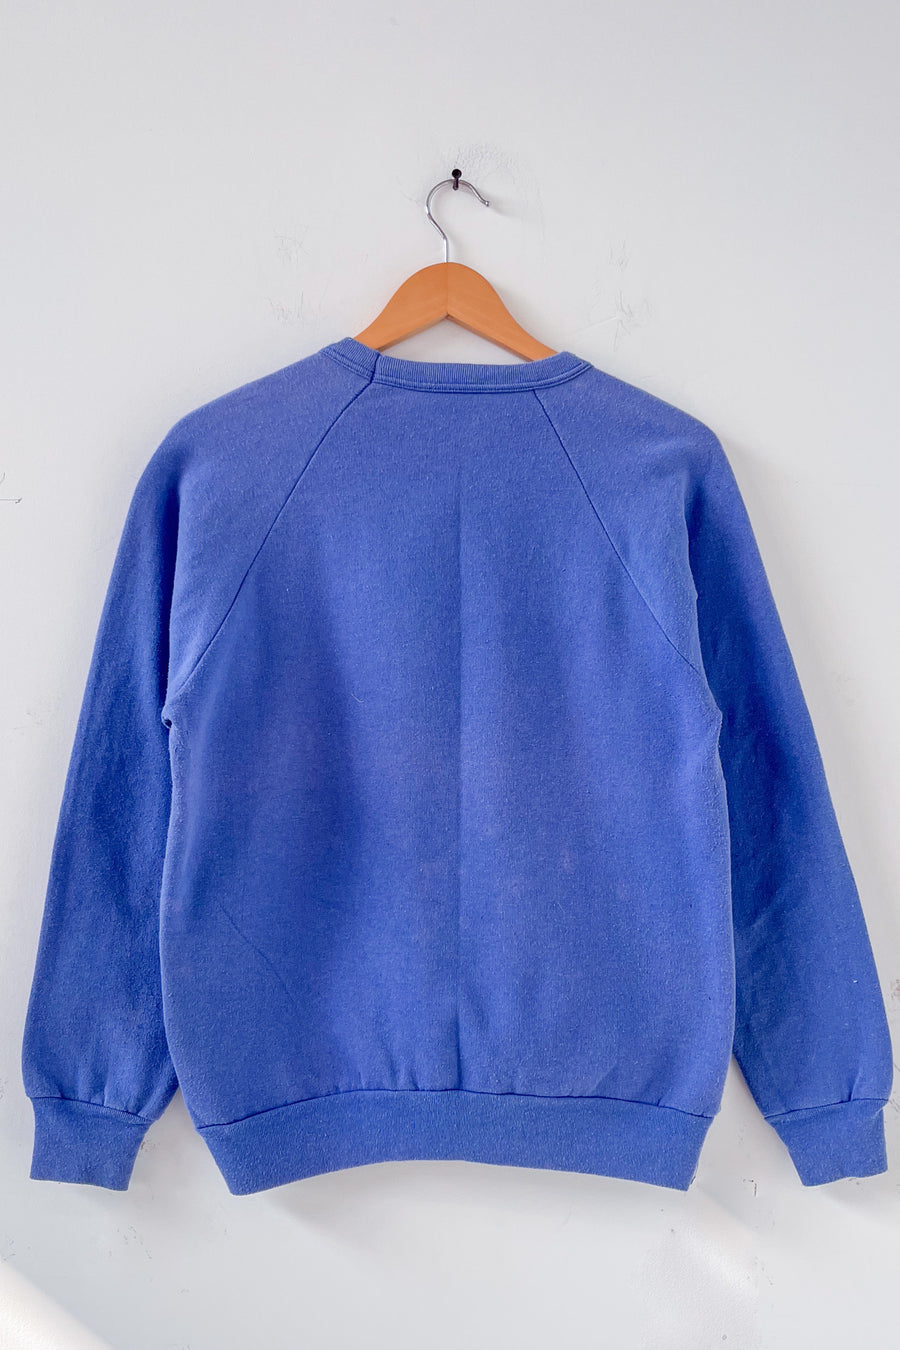 Vintage Souvenir Toronto Sweater